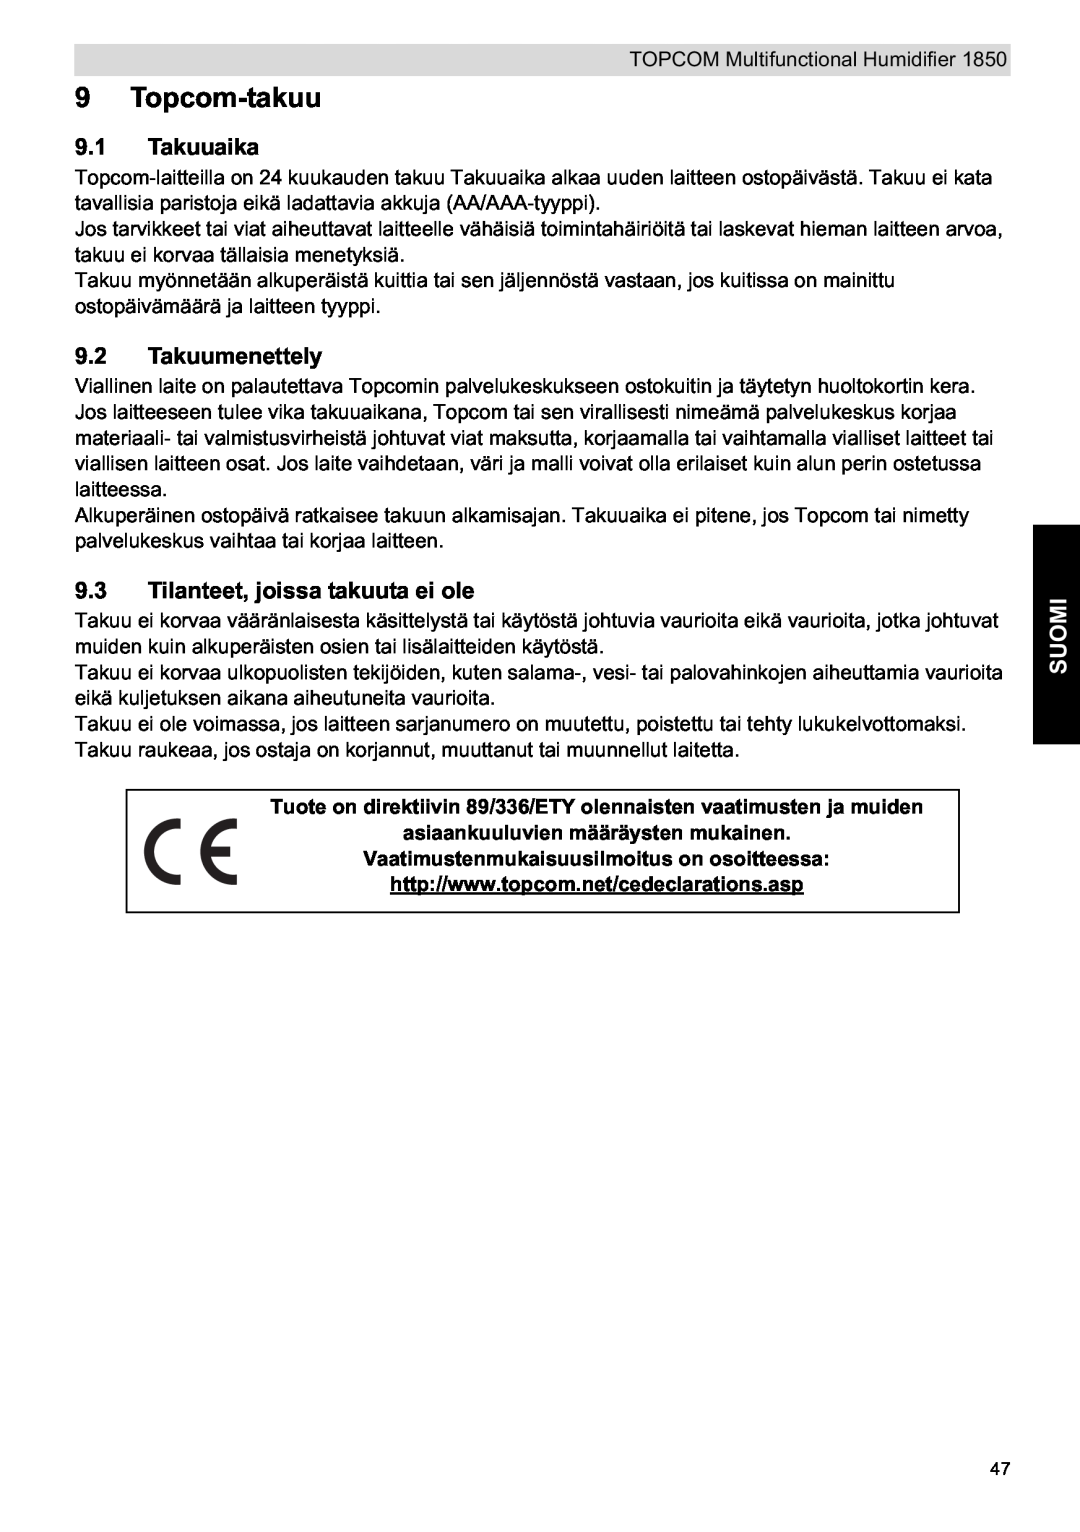 Topcom 1850 manual do utilizador Topcom-takuu, Takuuaika, Takuumenettely, Tilanteet, joissa takuuta ei ole, Suomi 